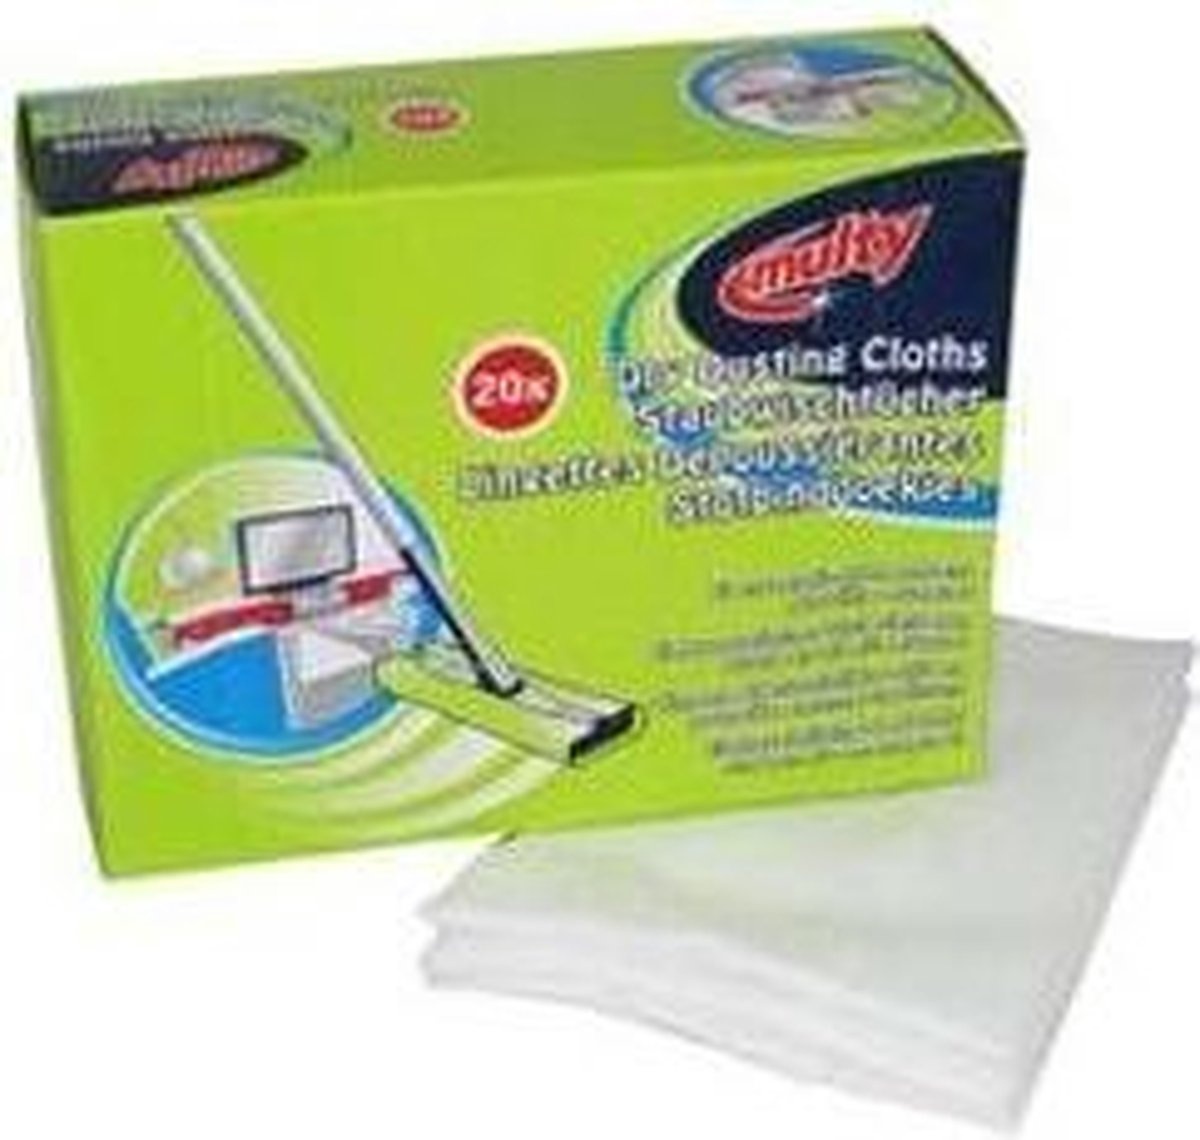 Multy Dust Binding Cloths In Box - 20 pcs.